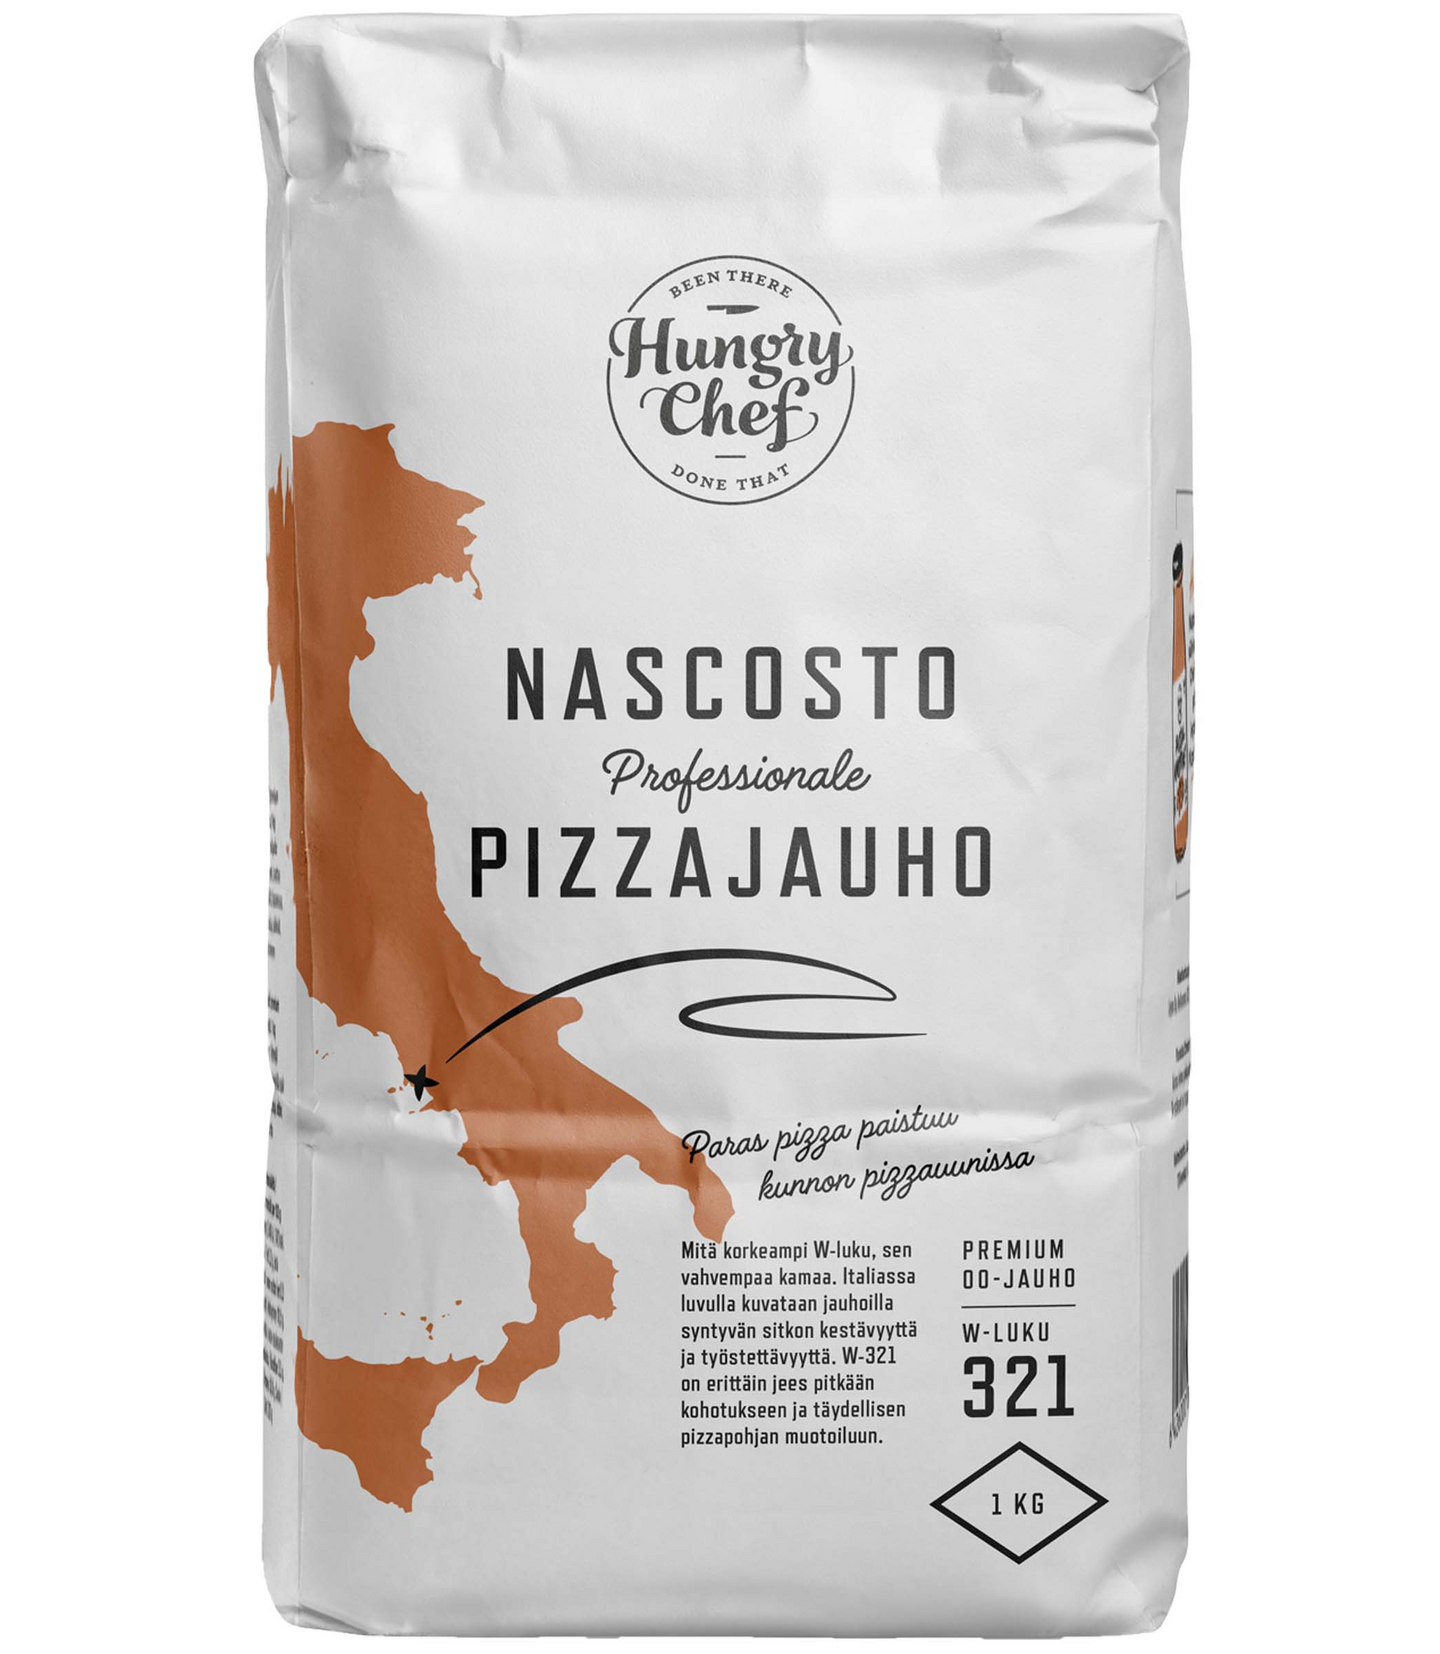 Hungry Chef Nascosto pizzajauho "00" 1kg